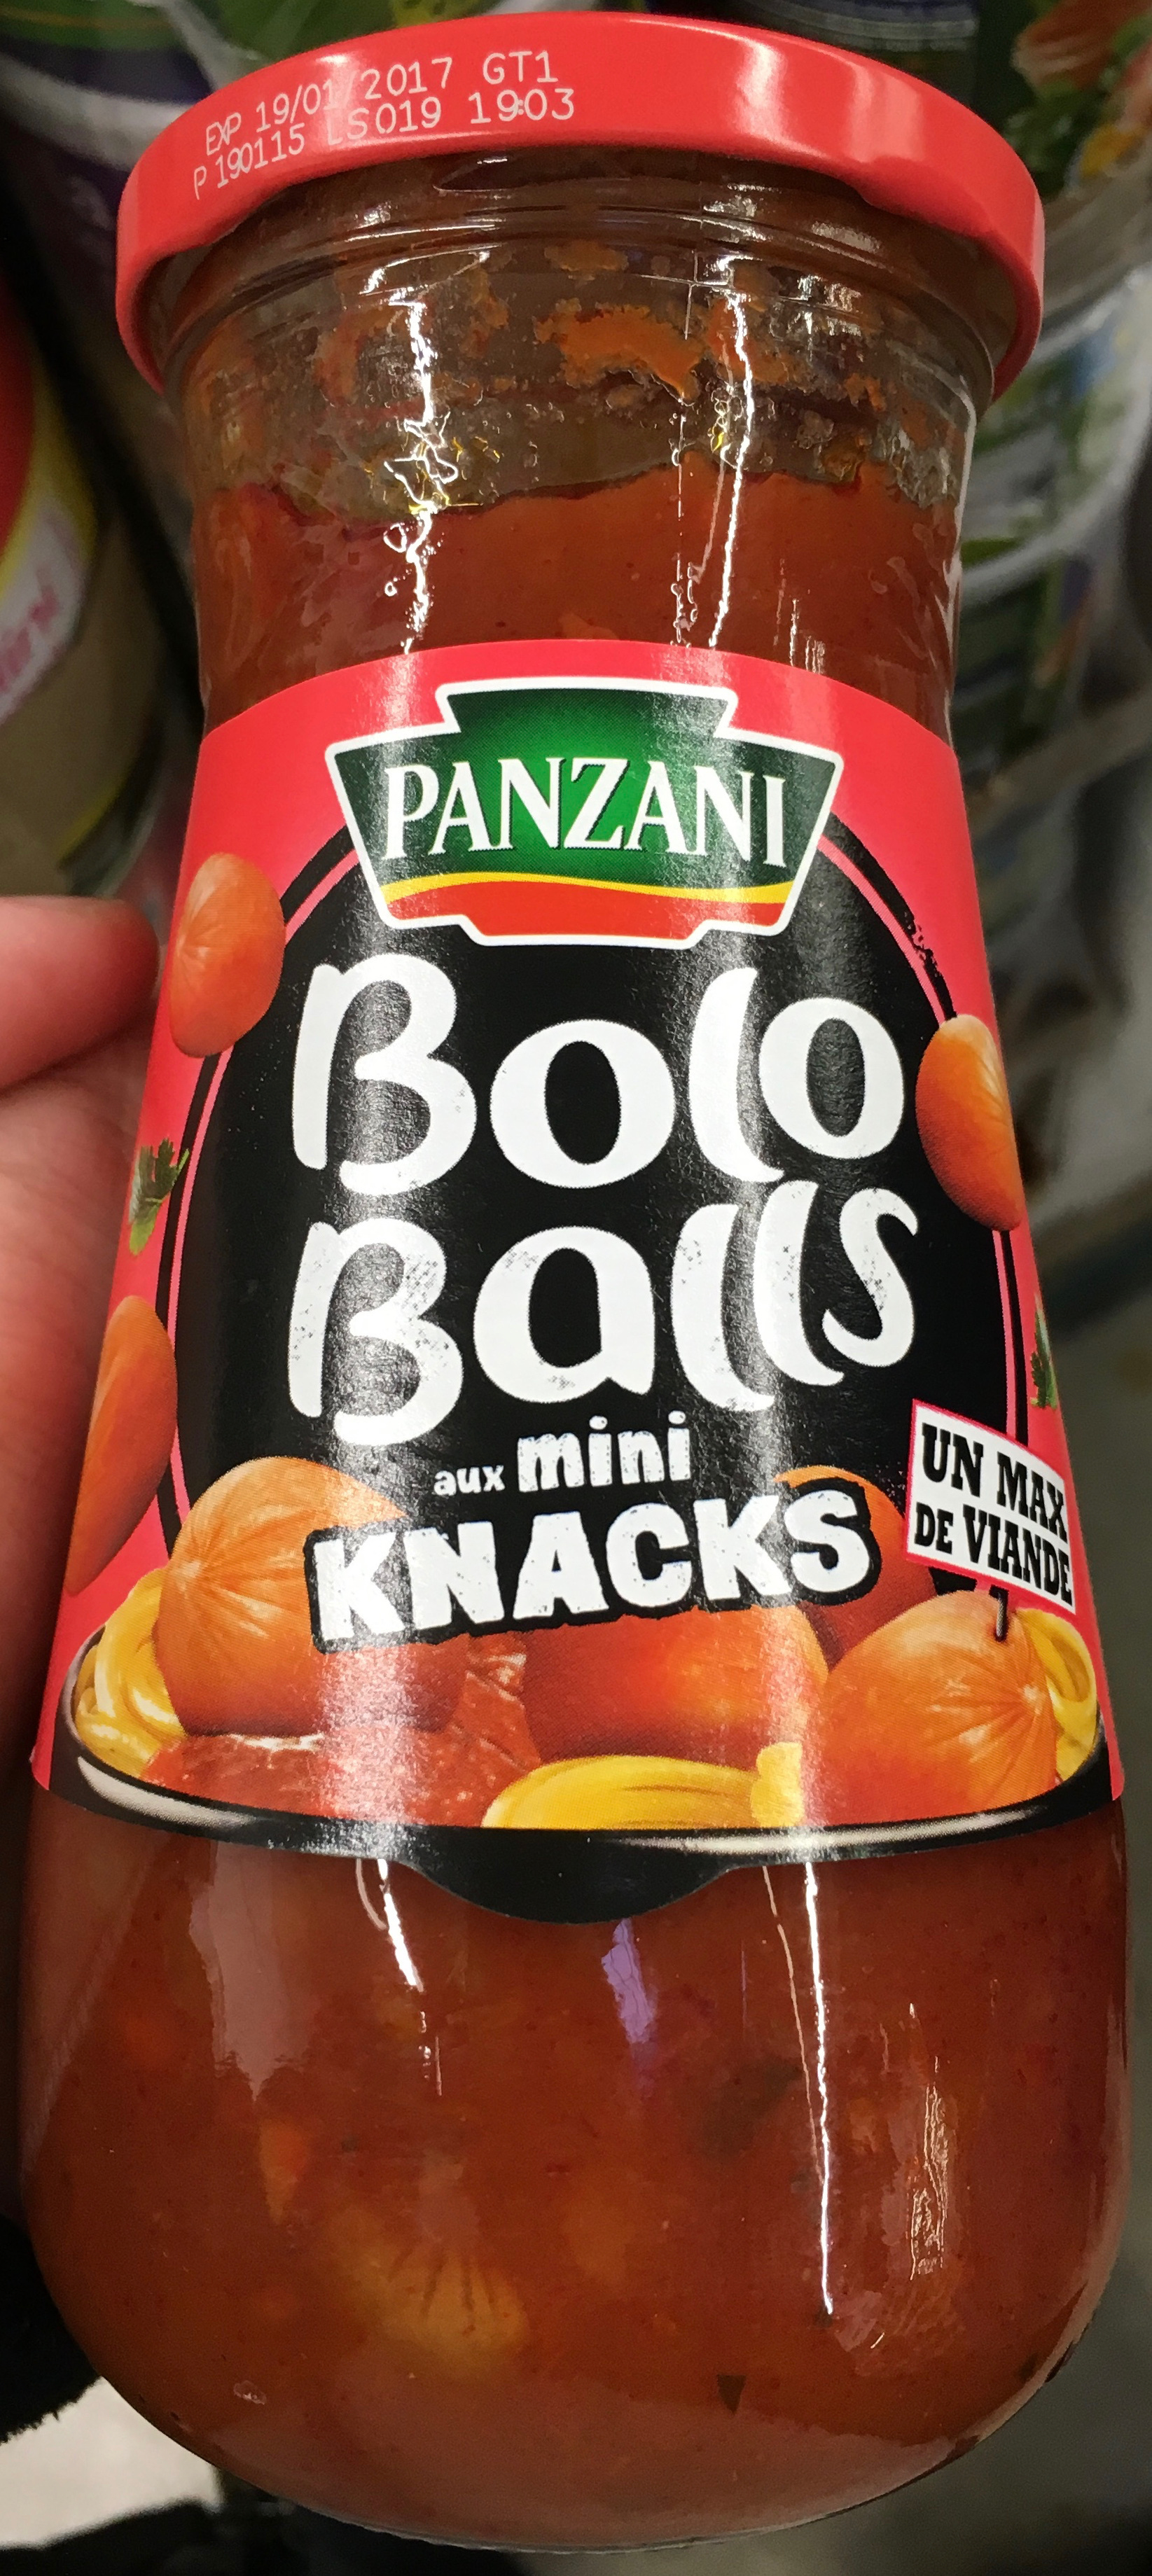 Bolo Balls aux mini knacks - Product - fr